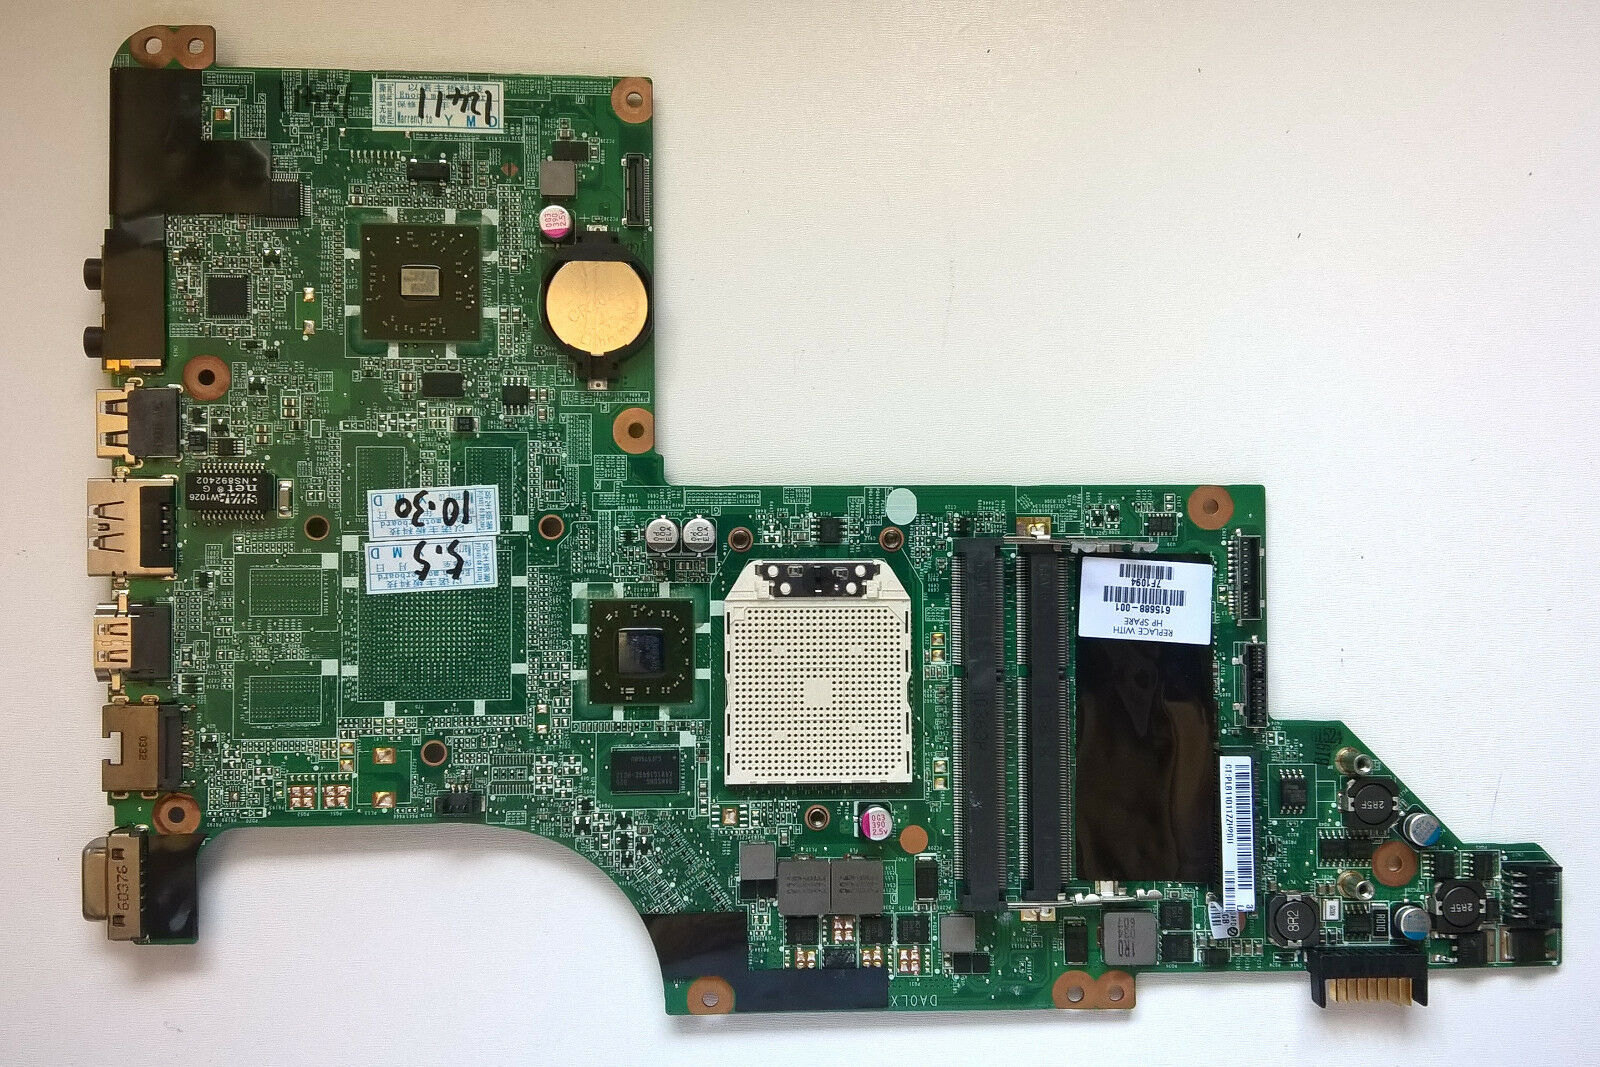 615688-001 DA0LX8MB6D1 (AMD B350 Chipset) Motherboard for HP DV7-4000 Laptop, CN Compatible CPU Brand: AMD N